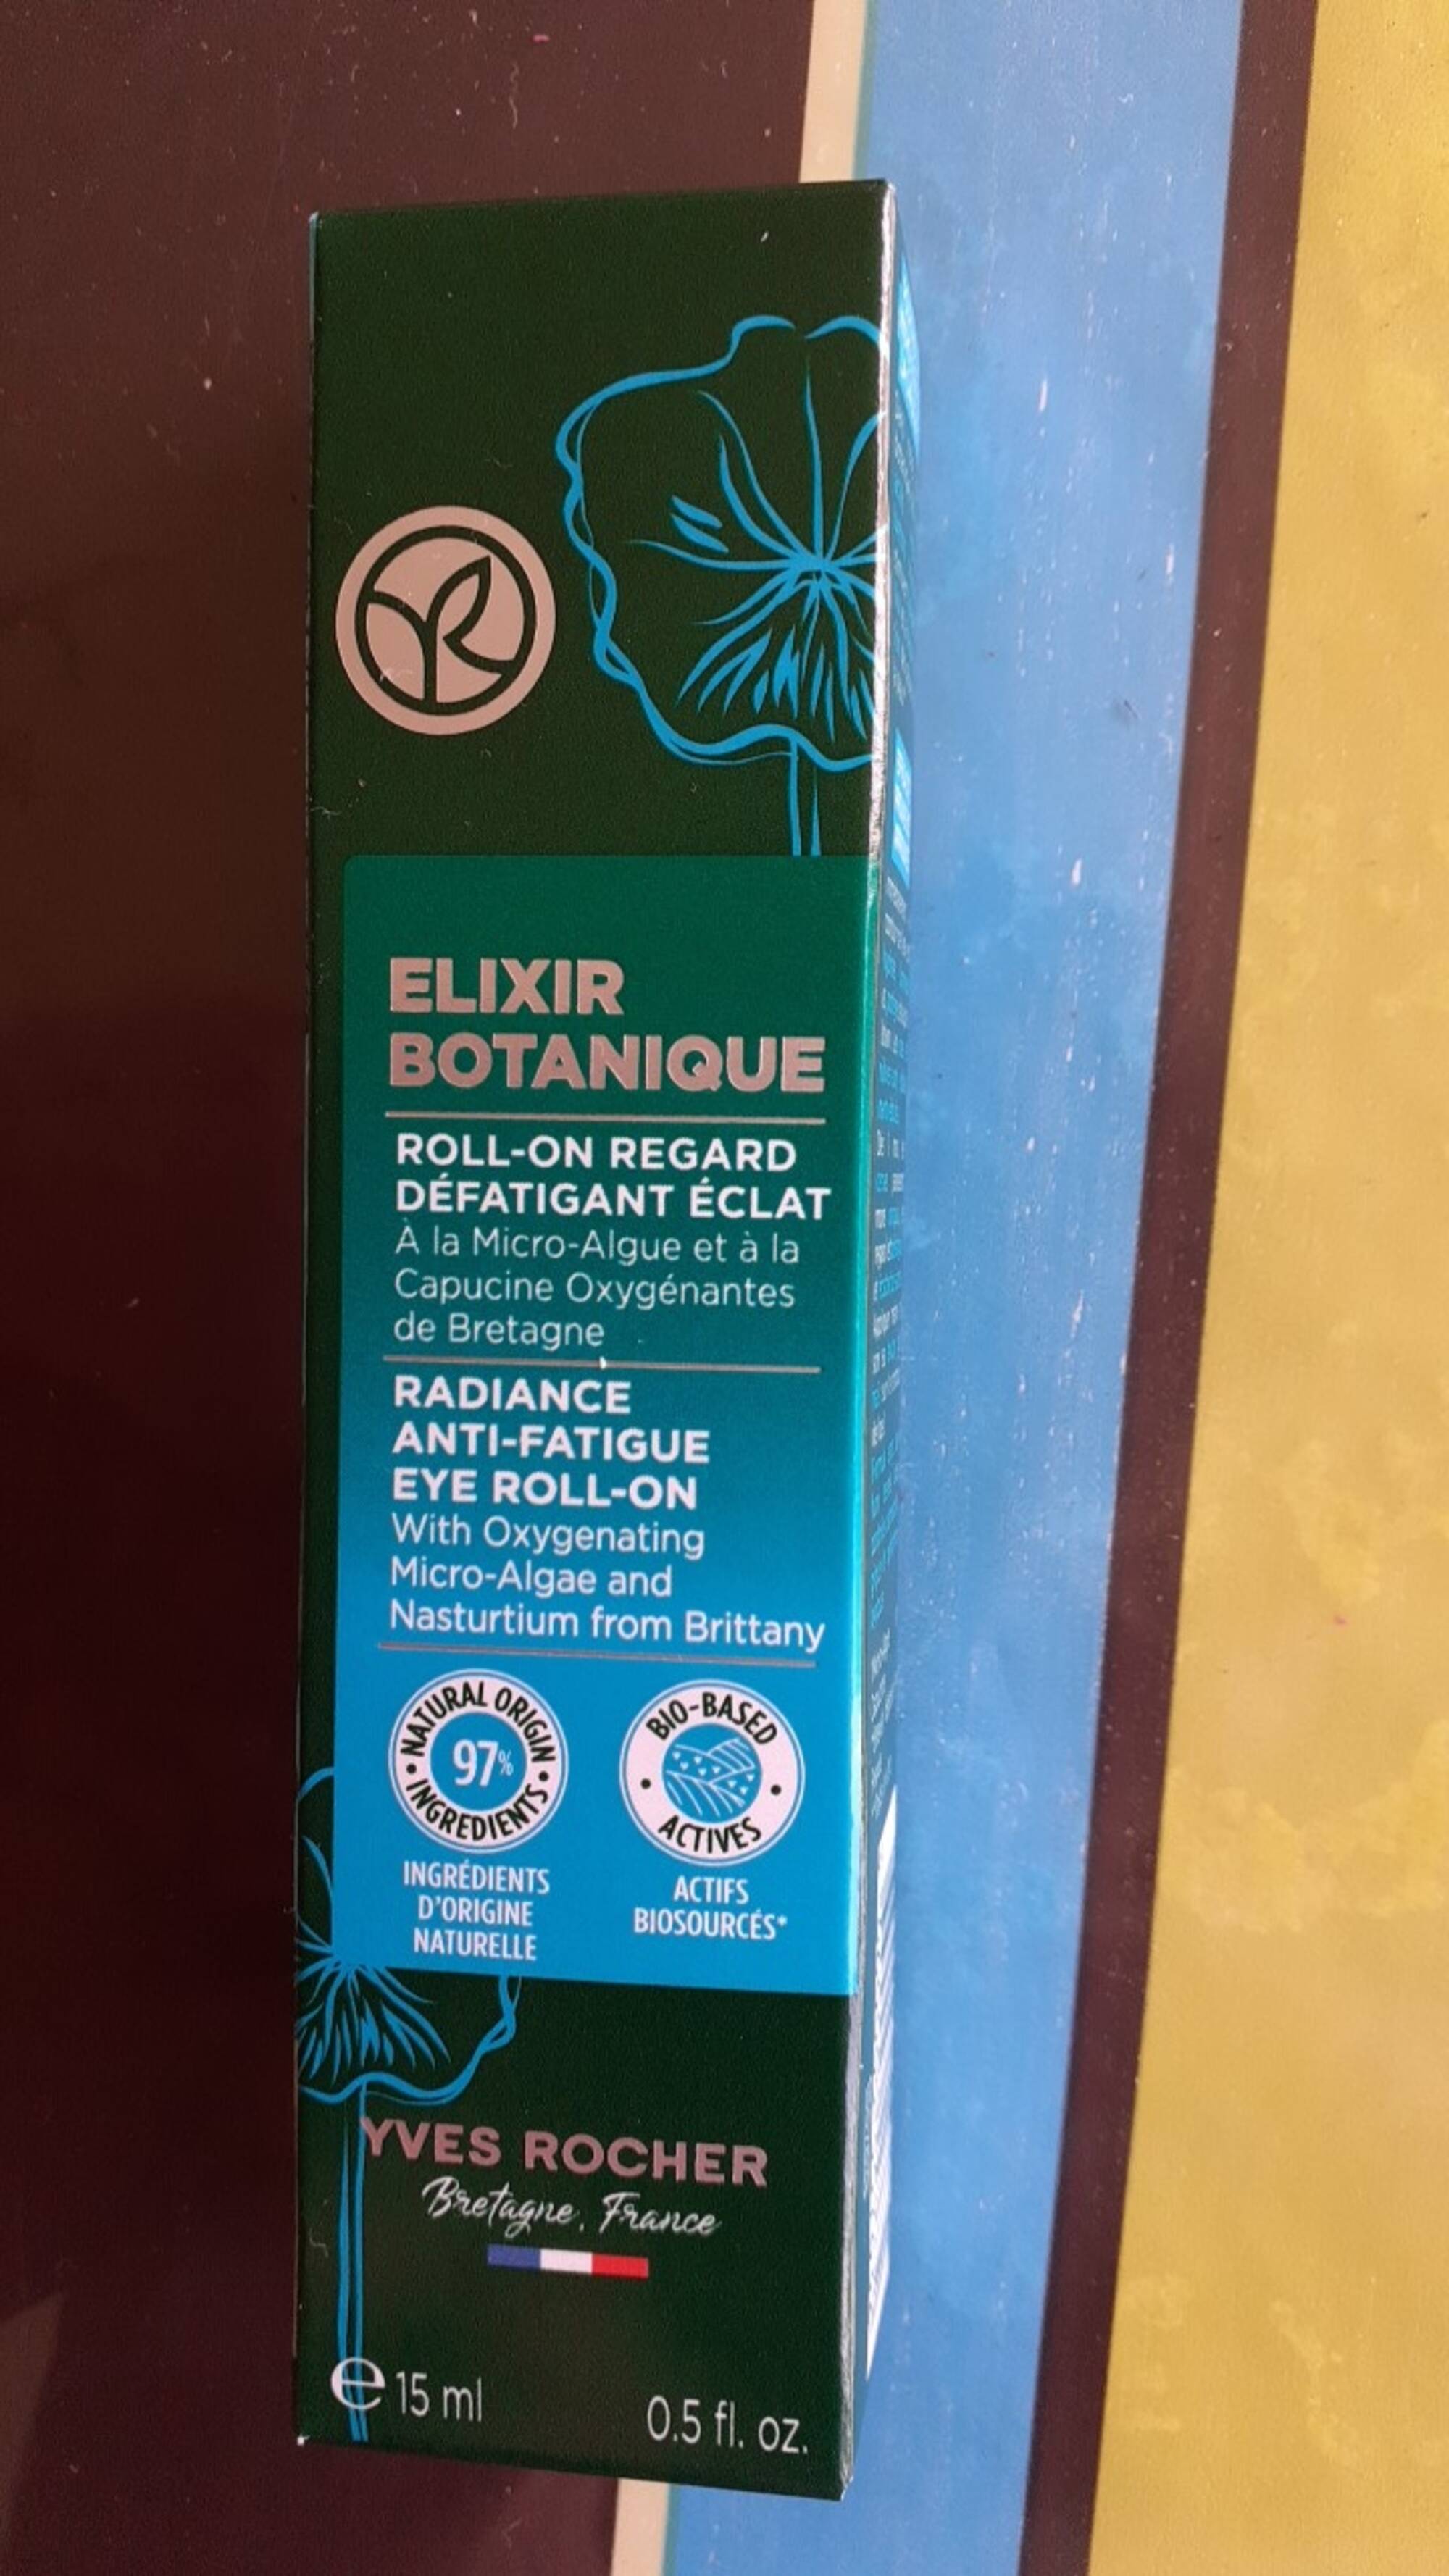 YVES ROCHER - Elixir botanique - Radiance anti-fatigue eye roll-on